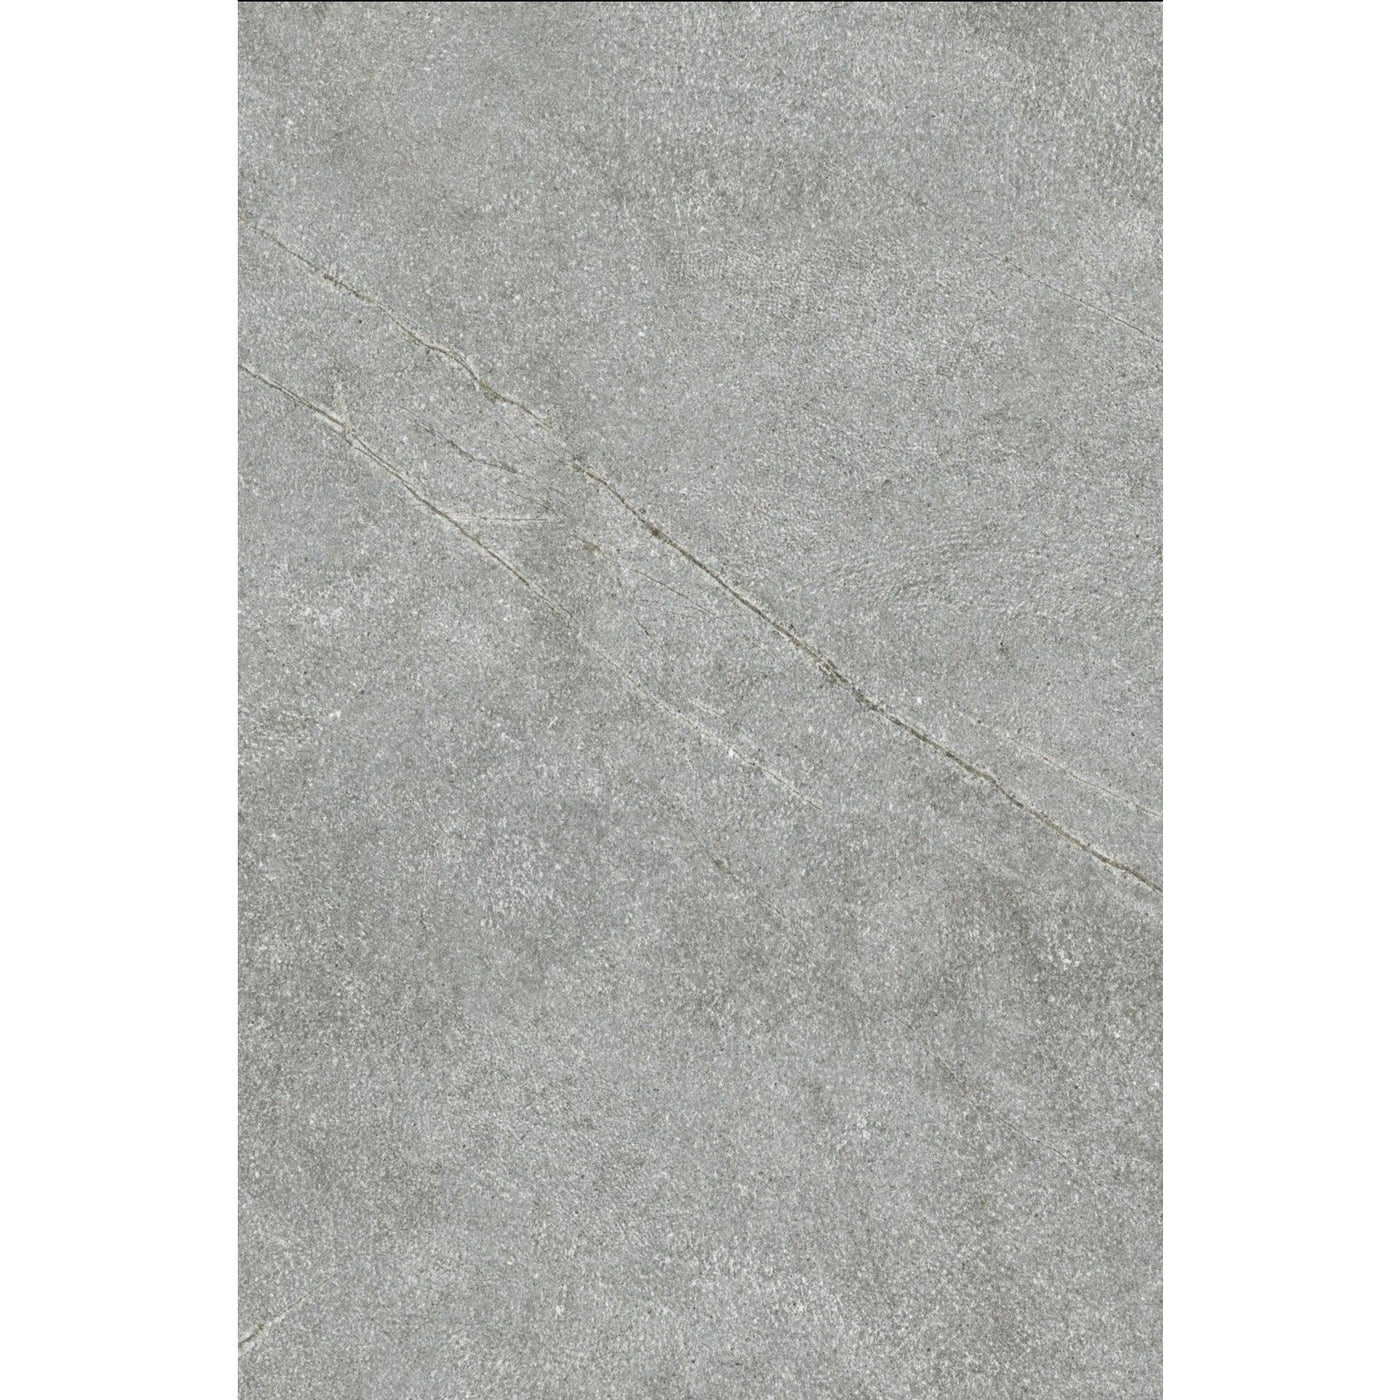 Atlantis Hammered Grey Tile - Textured, durable & premium quality - Letta London - 